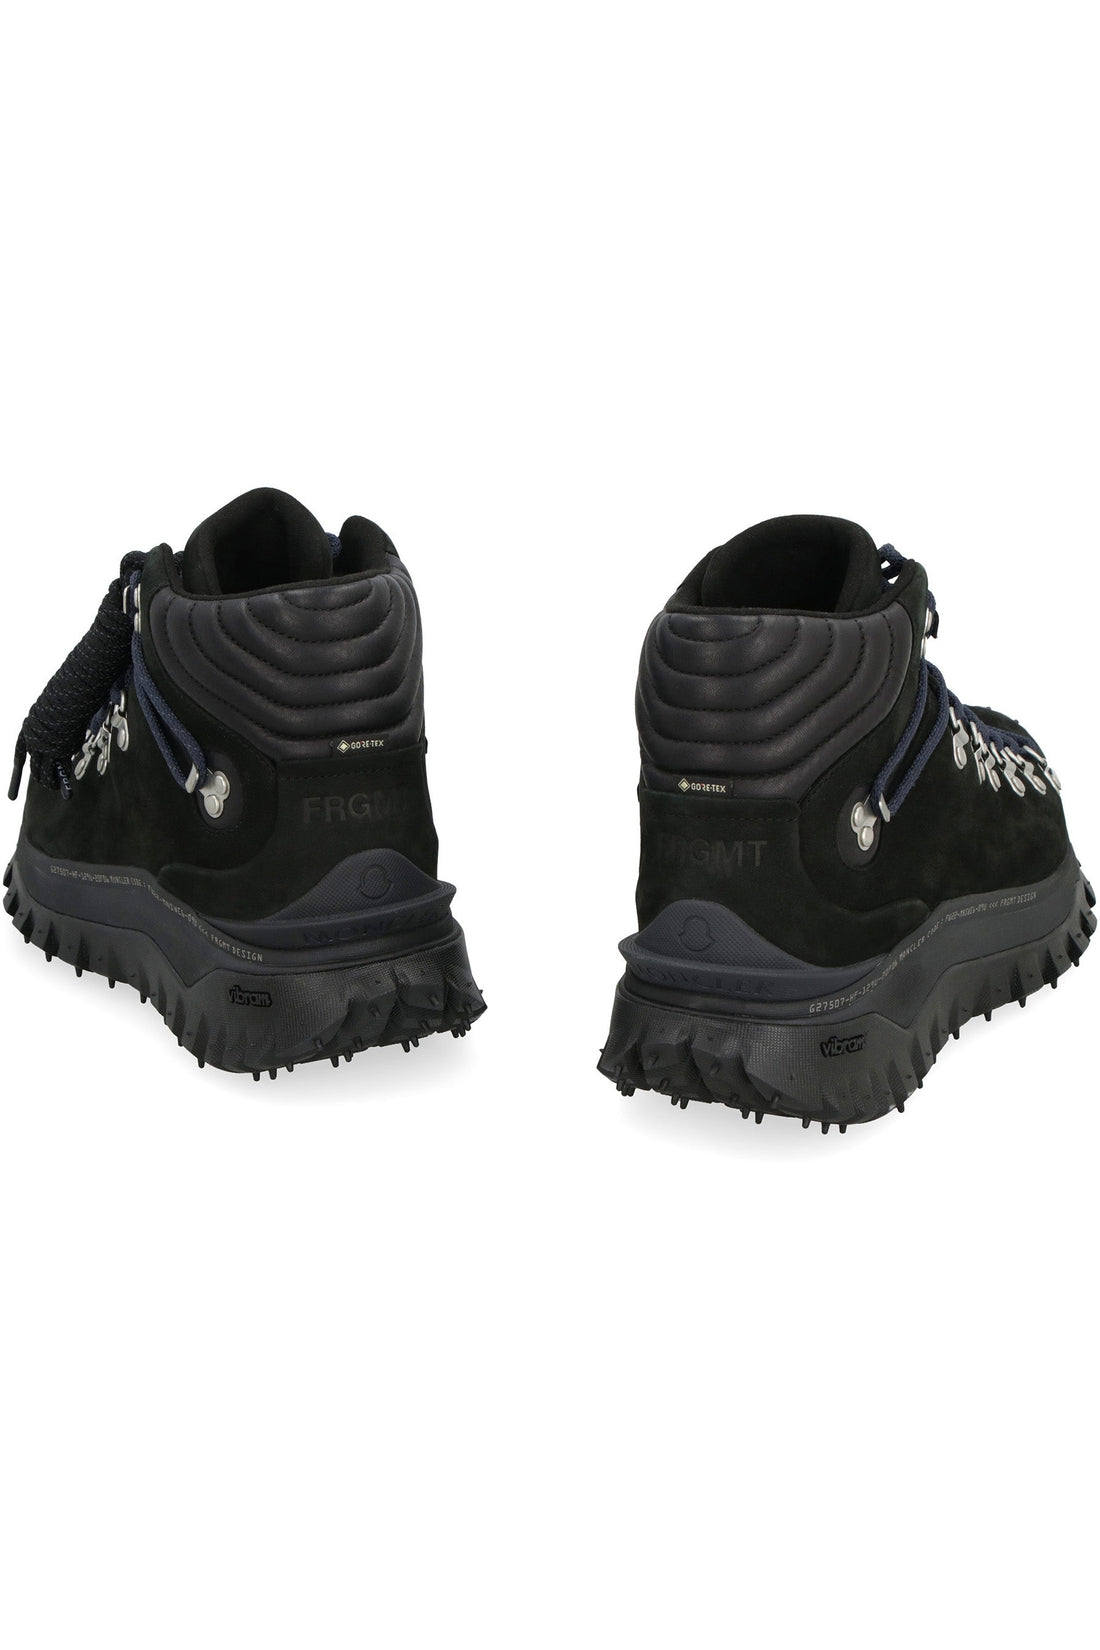 Moncler Genius-OUTLET-SALE-7 Moncler FRGMT Hiroshi Fujiwara - Trailgrip GTX hiking boots-ARCHIVIST